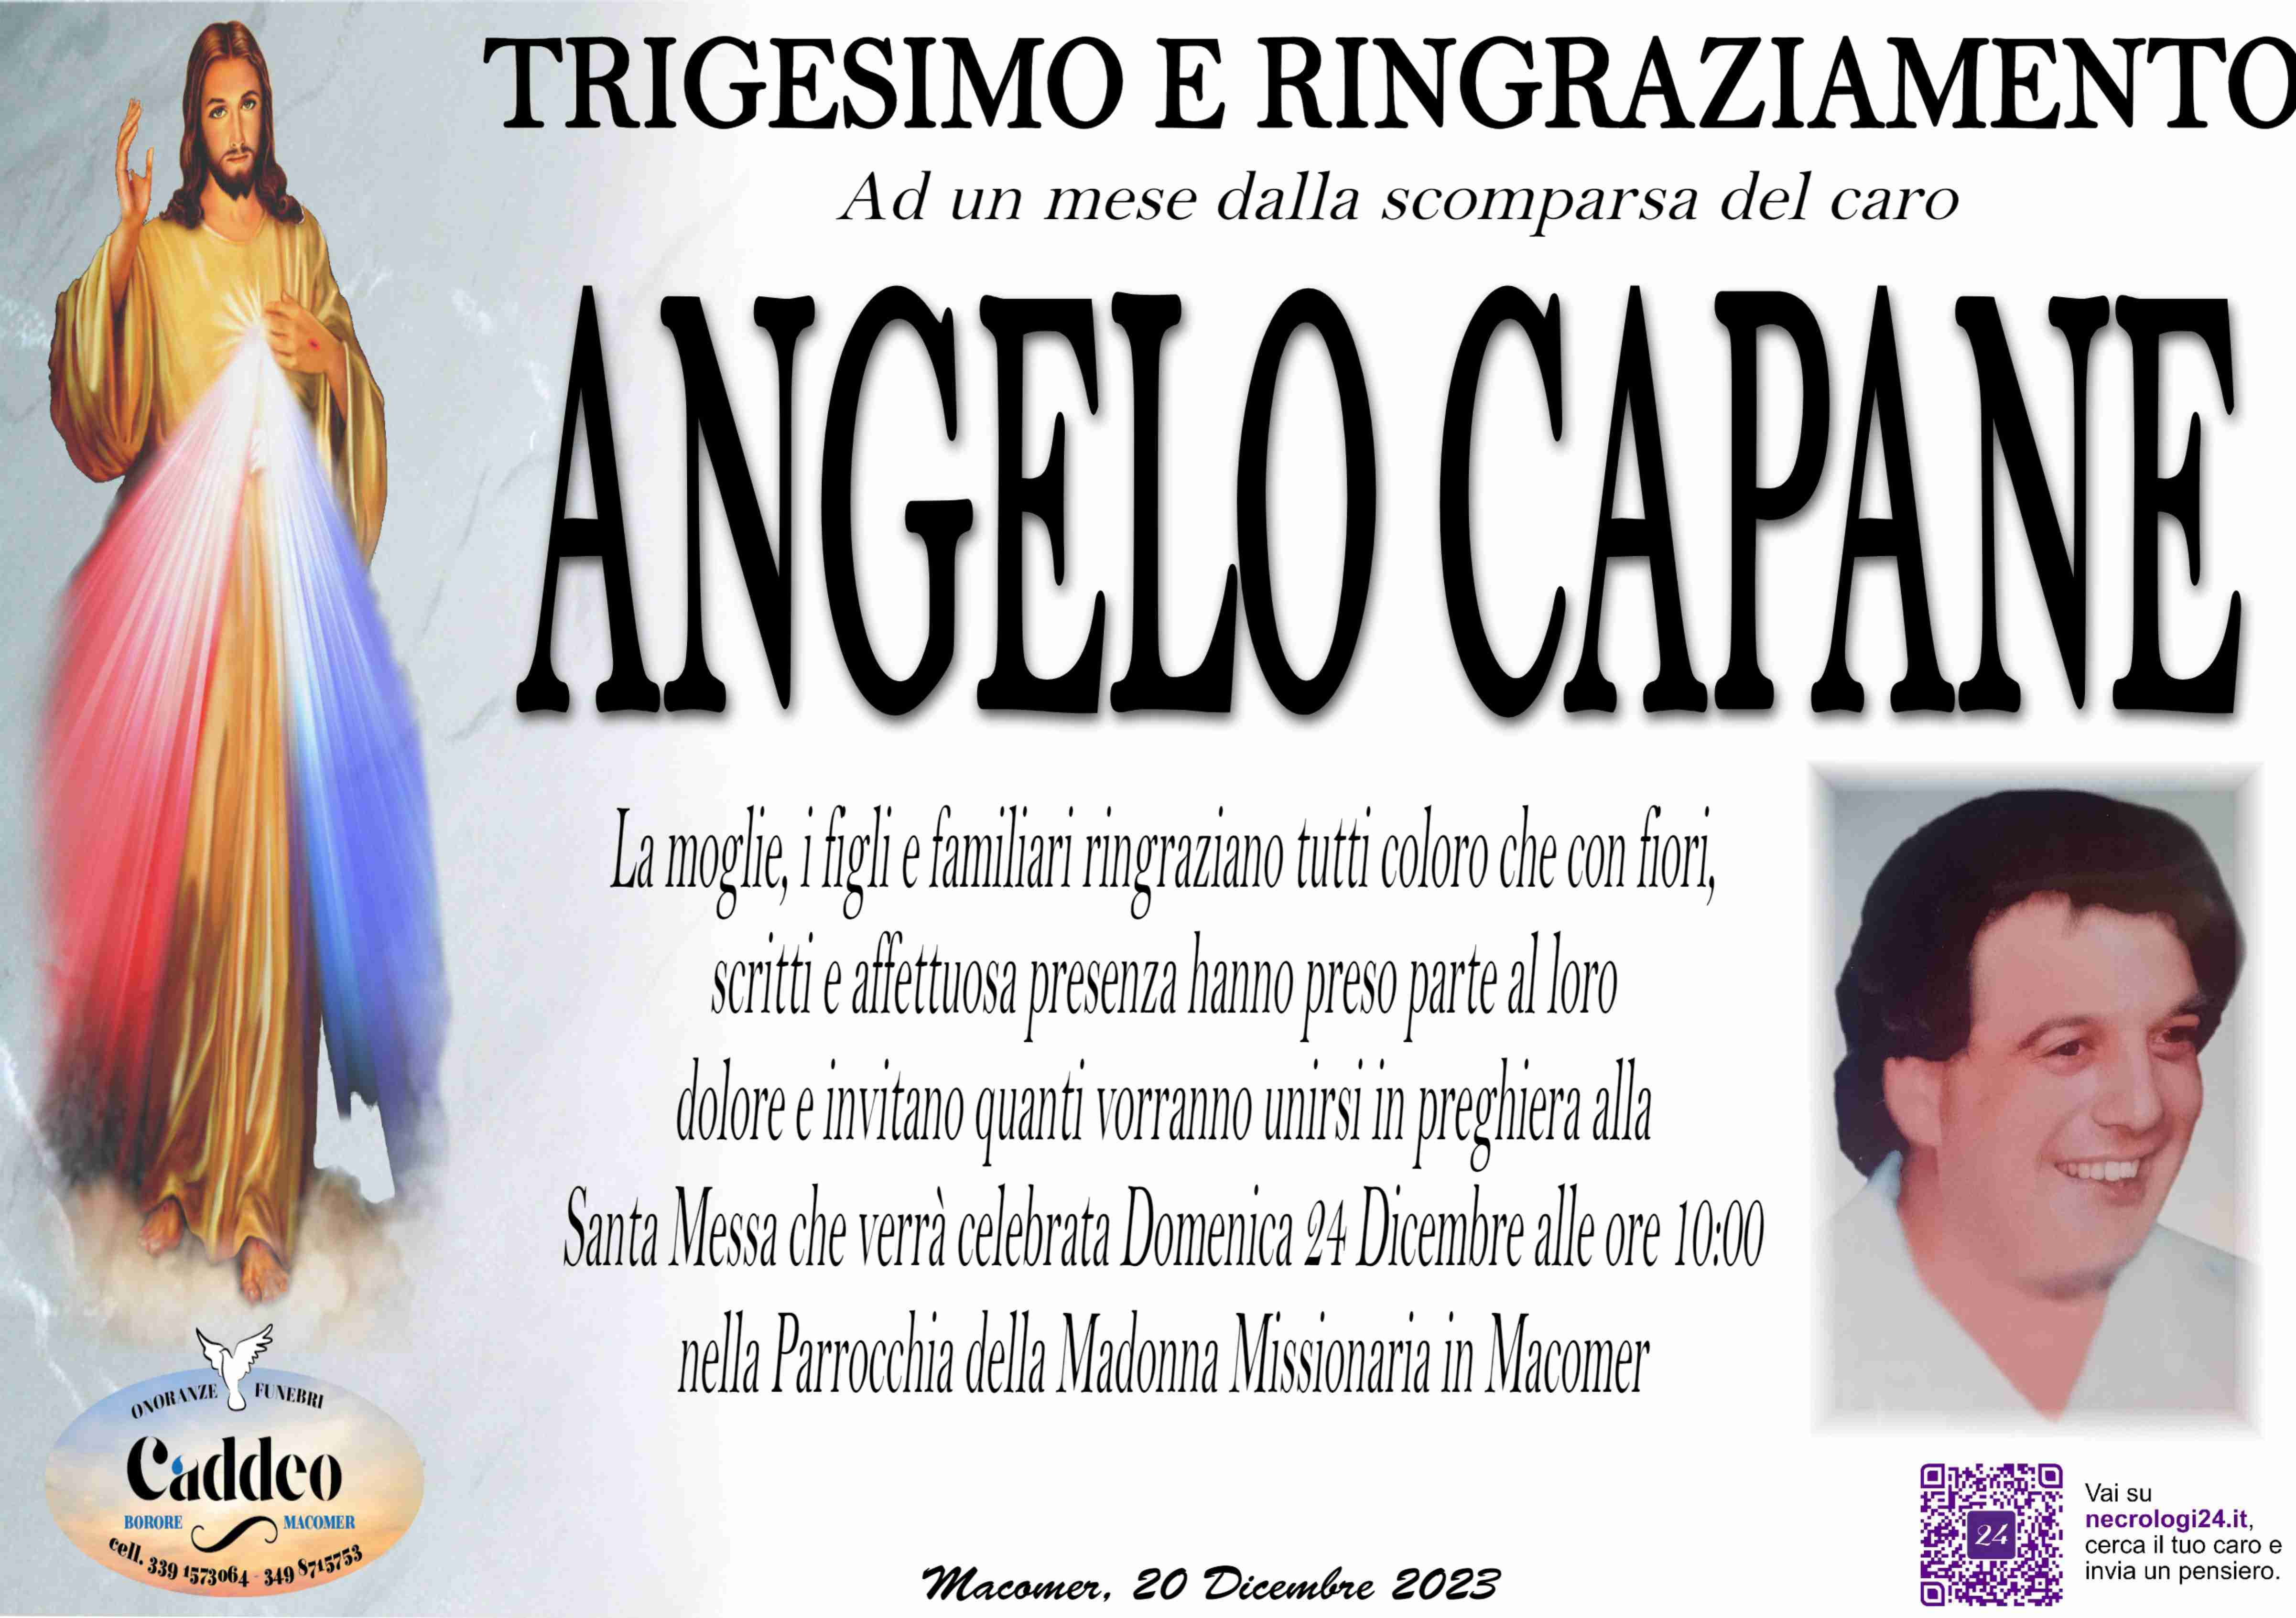 Angelo Capane